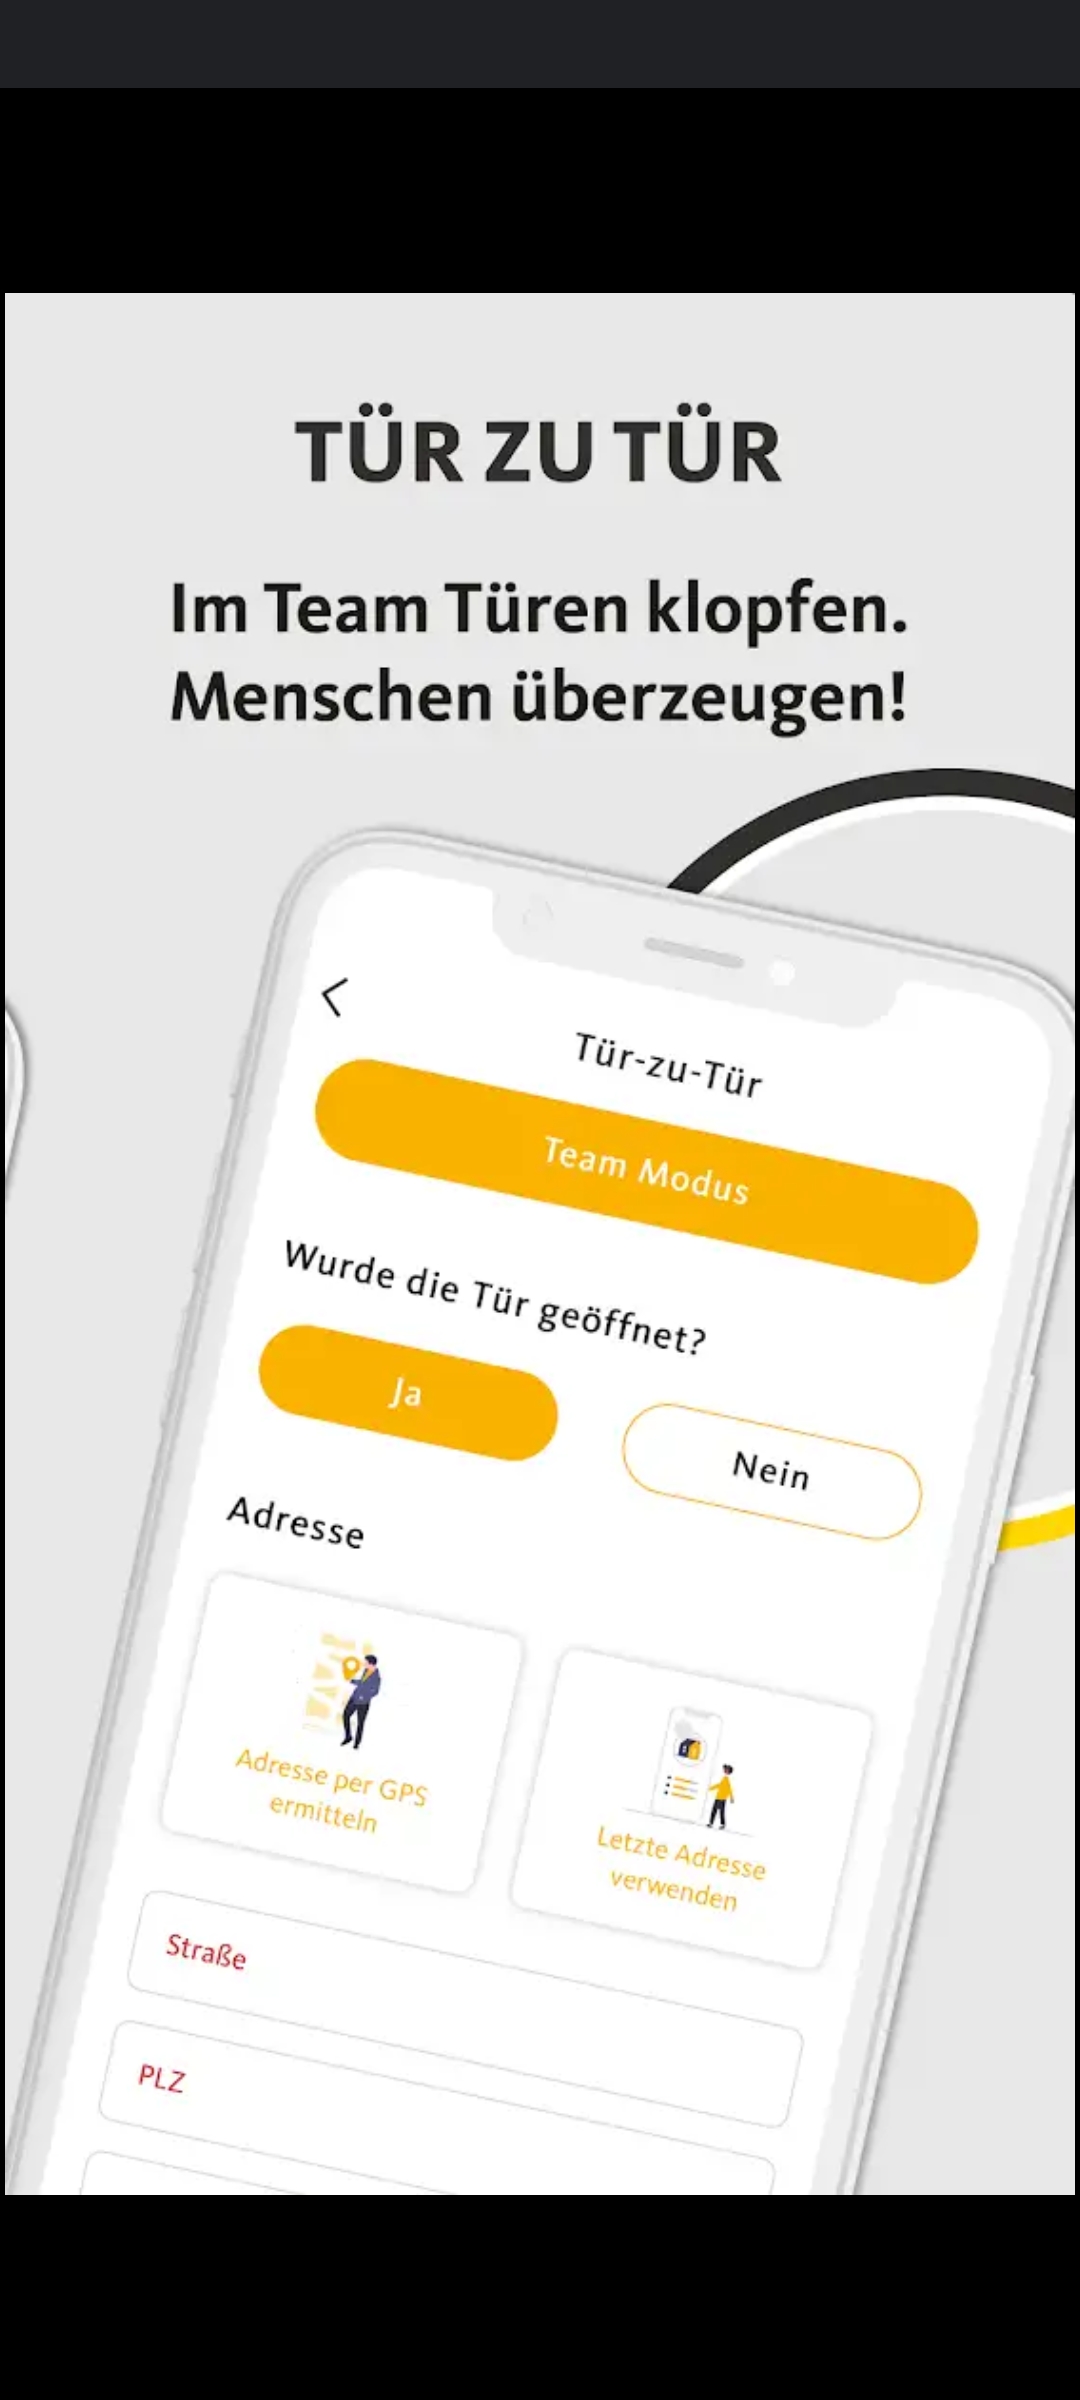 CDU Wahlkampf App: Wahlkampf App mit Datenschutzprobleme --App nun offline